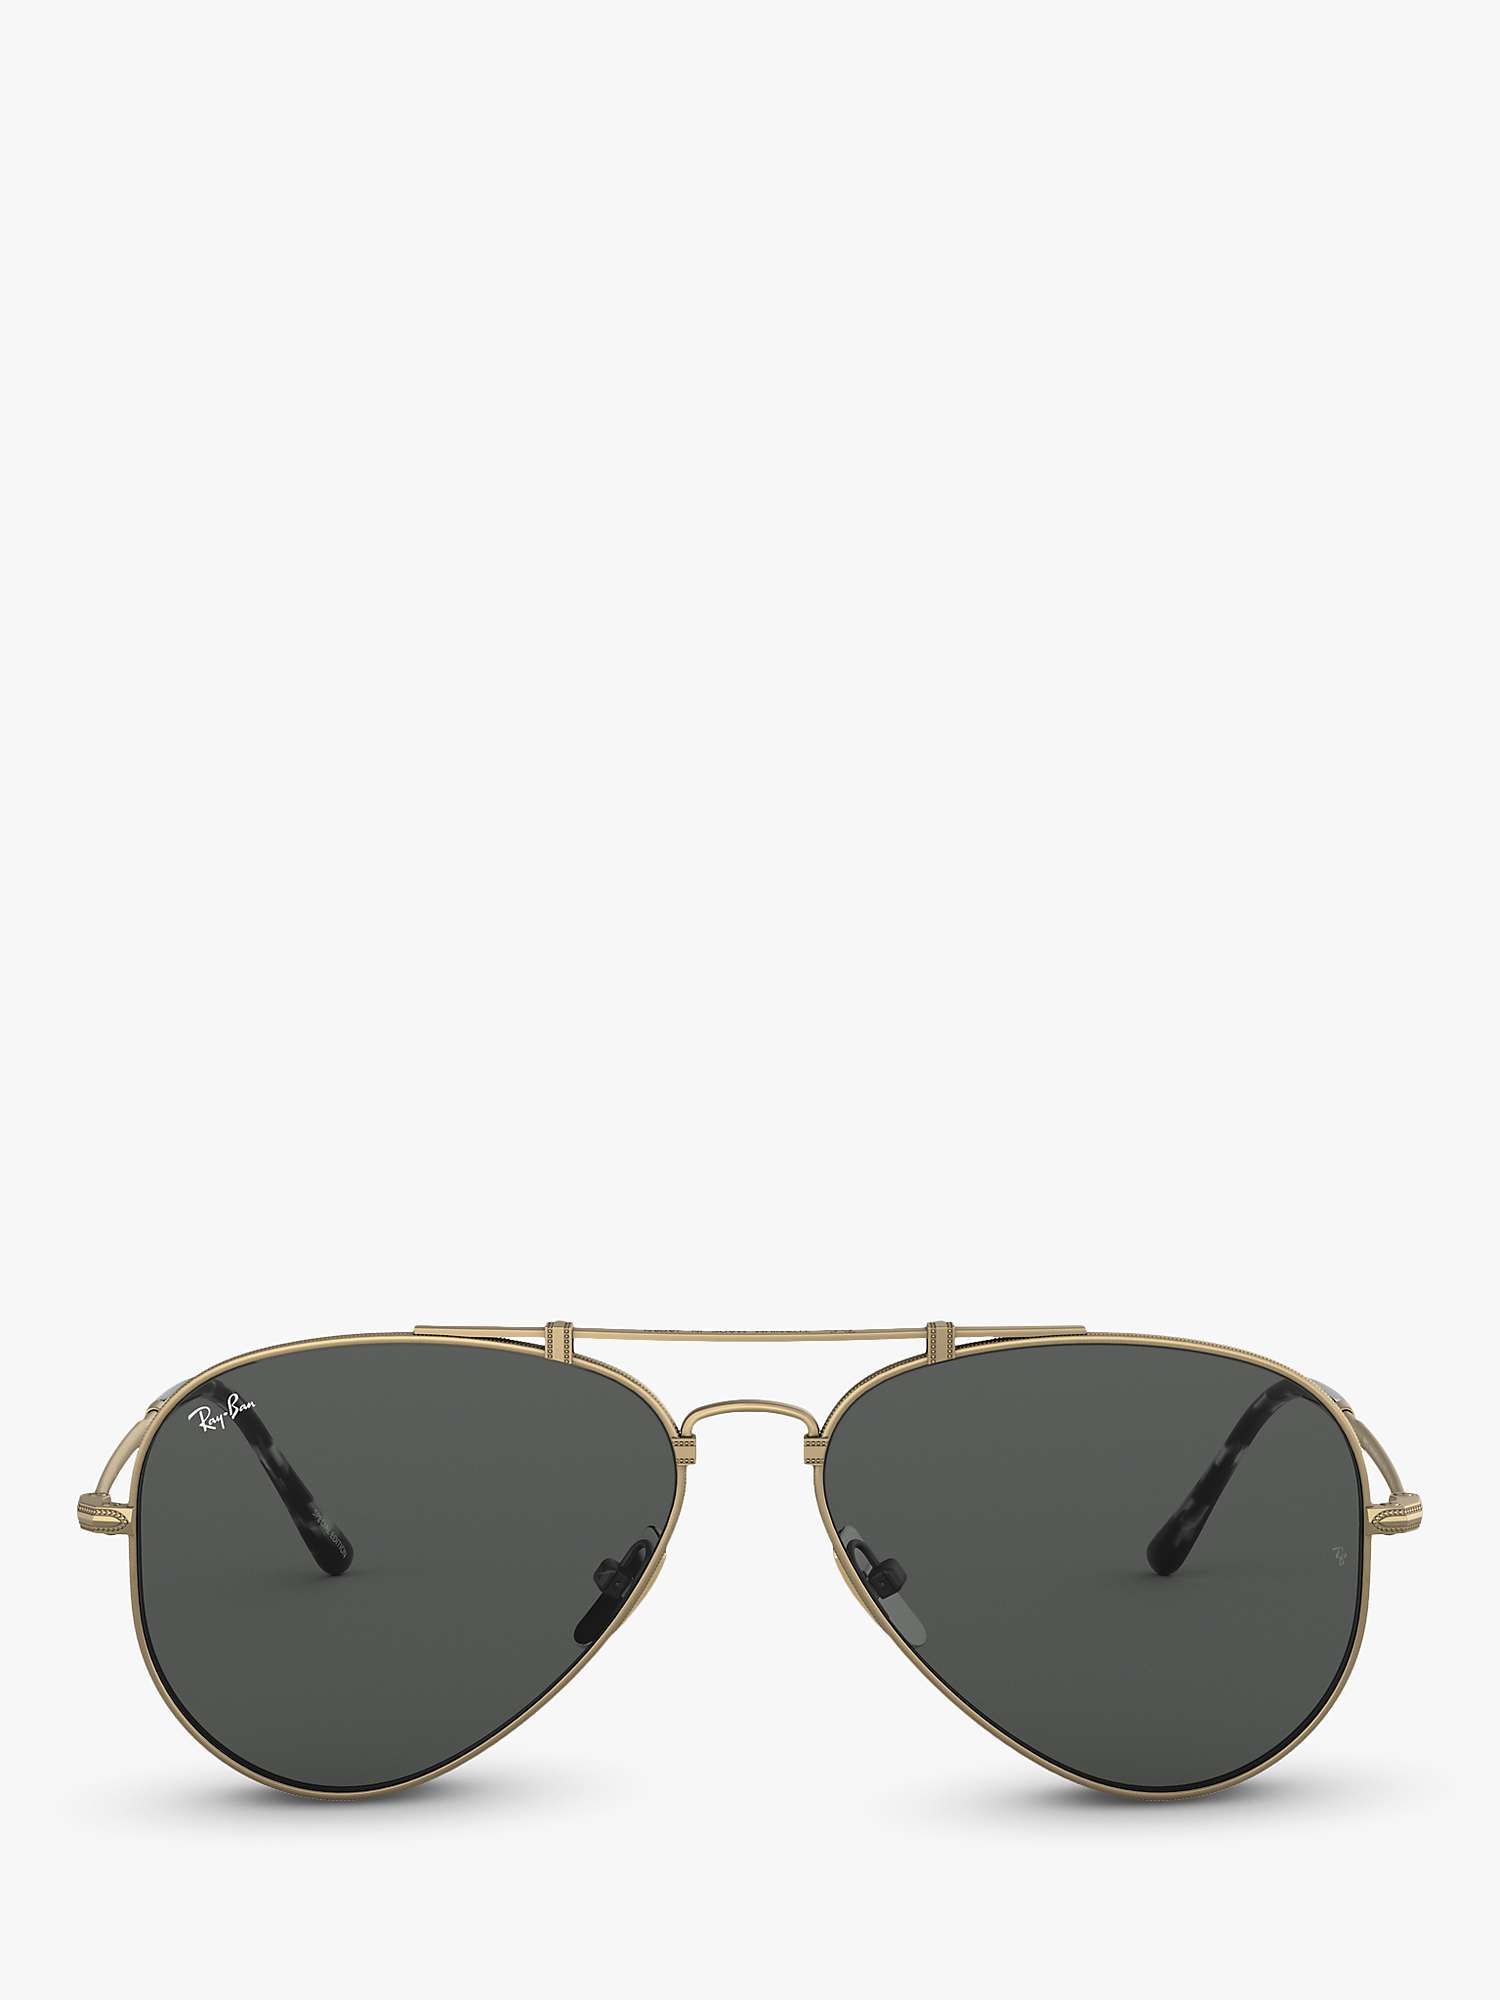 Buy Ray-Ban RB8125 Unisex Phantos Sunglasses, Demi Gloss Gold/Grey Online at johnlewis.com